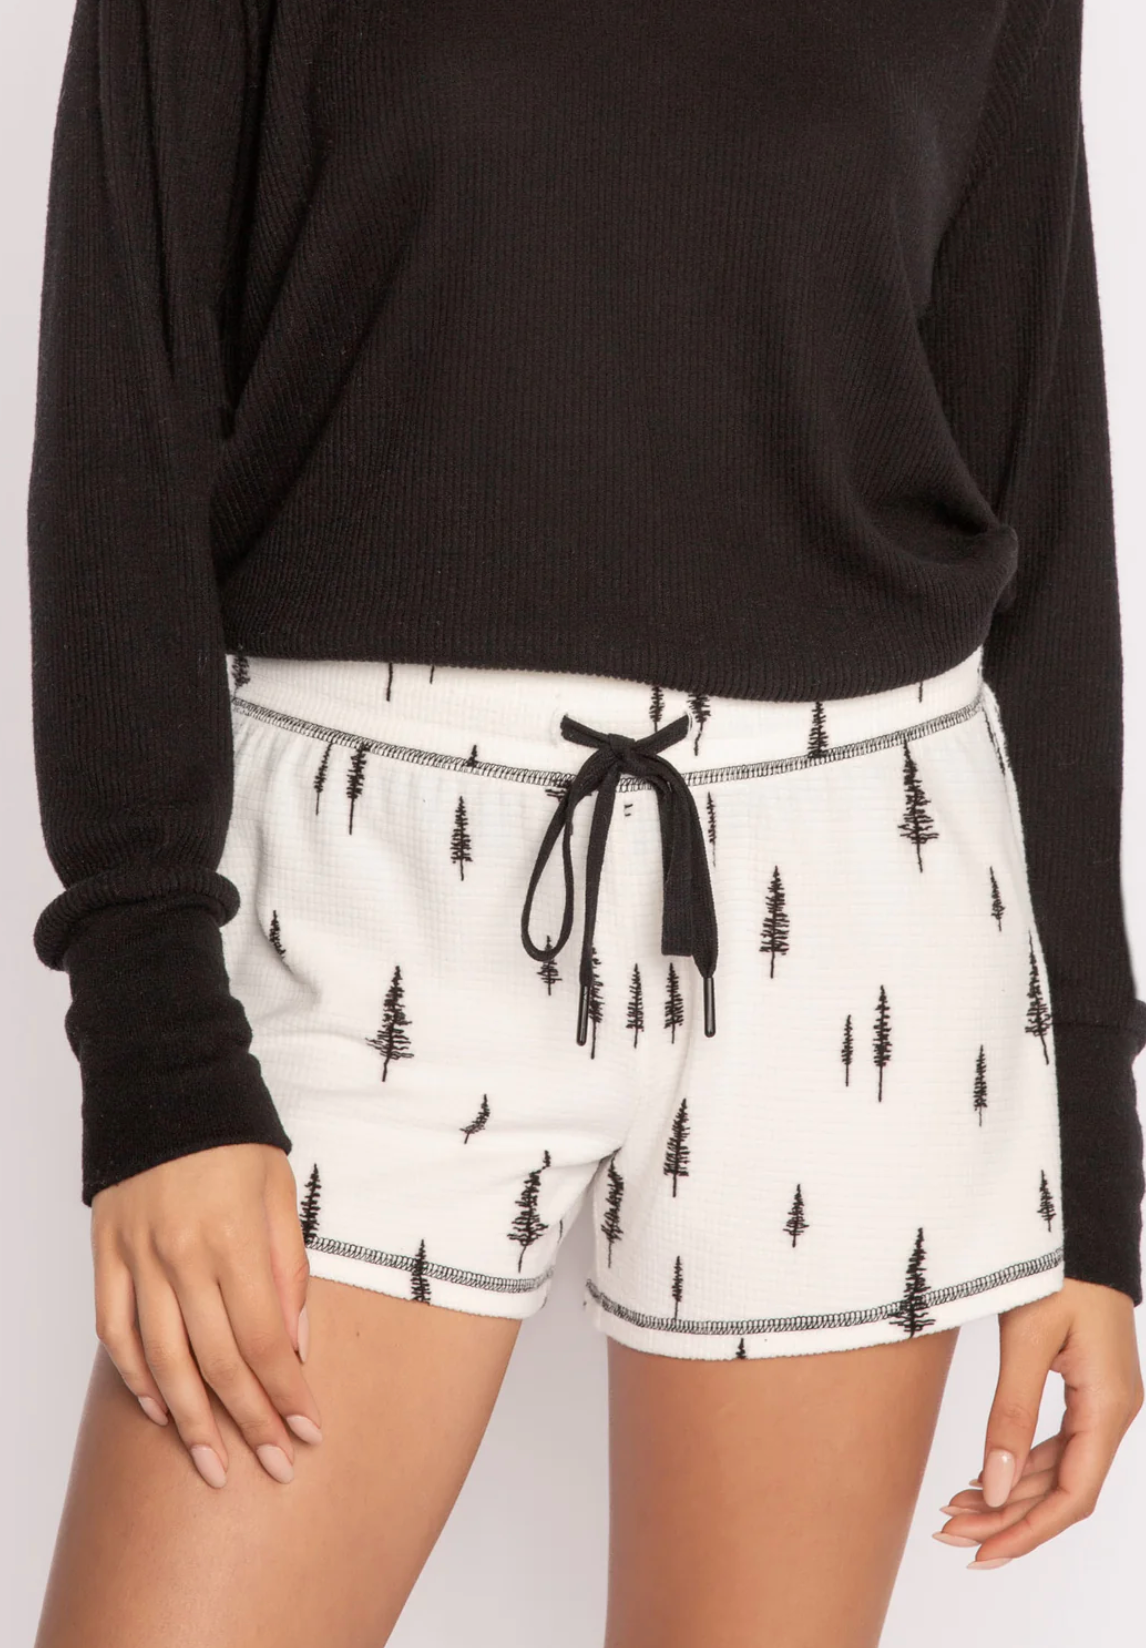 Pine Tree Shorts